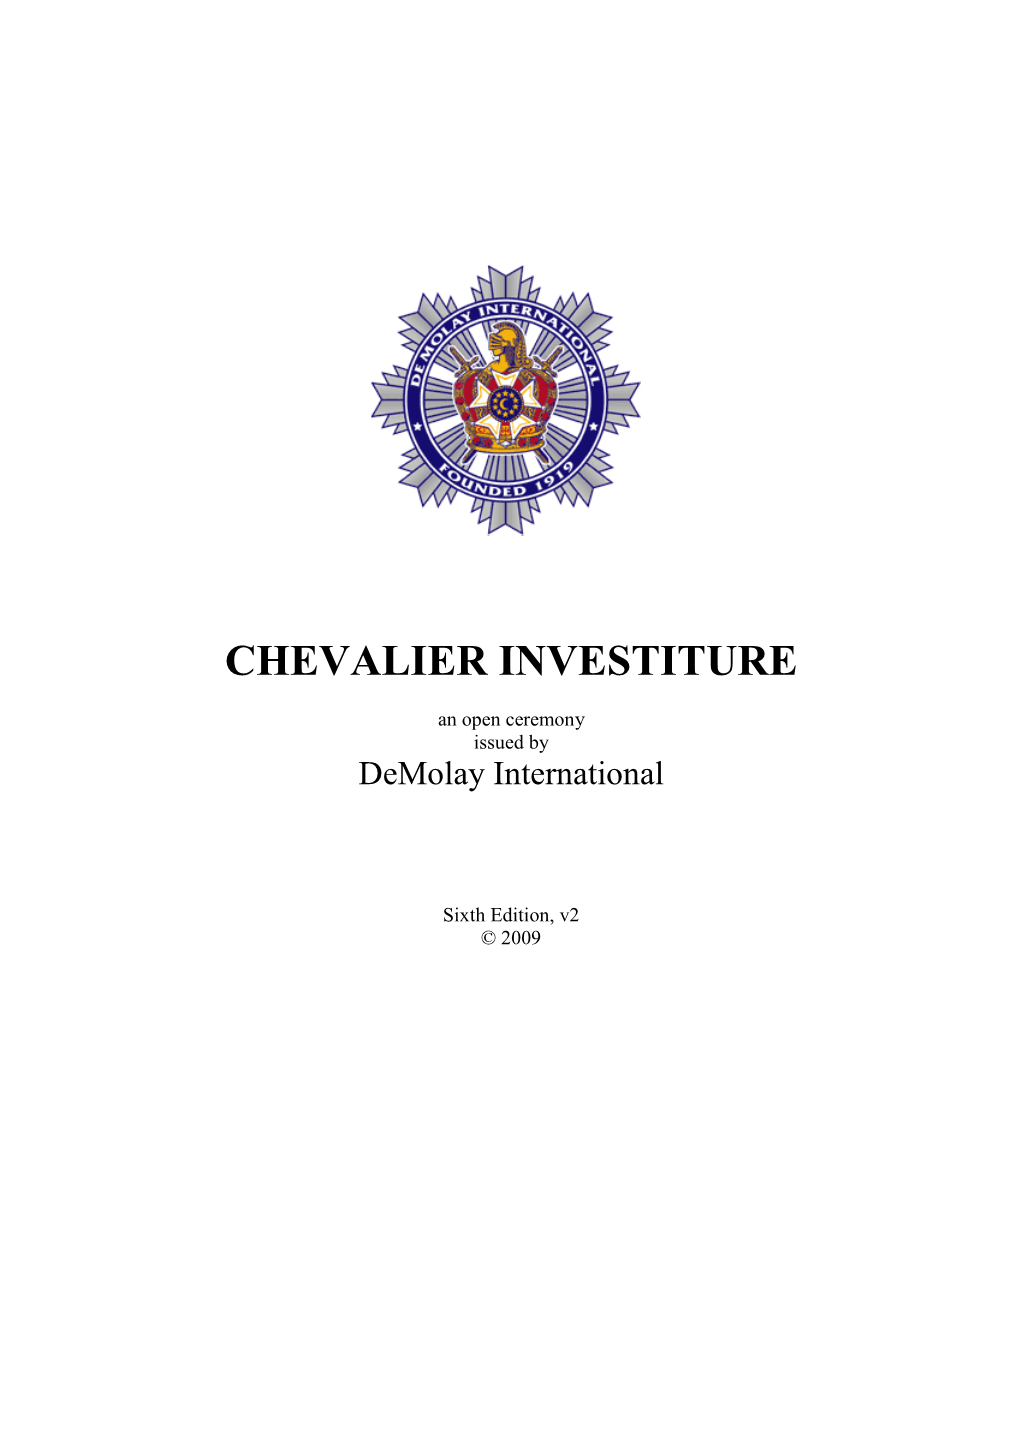 Chevalier Investiture